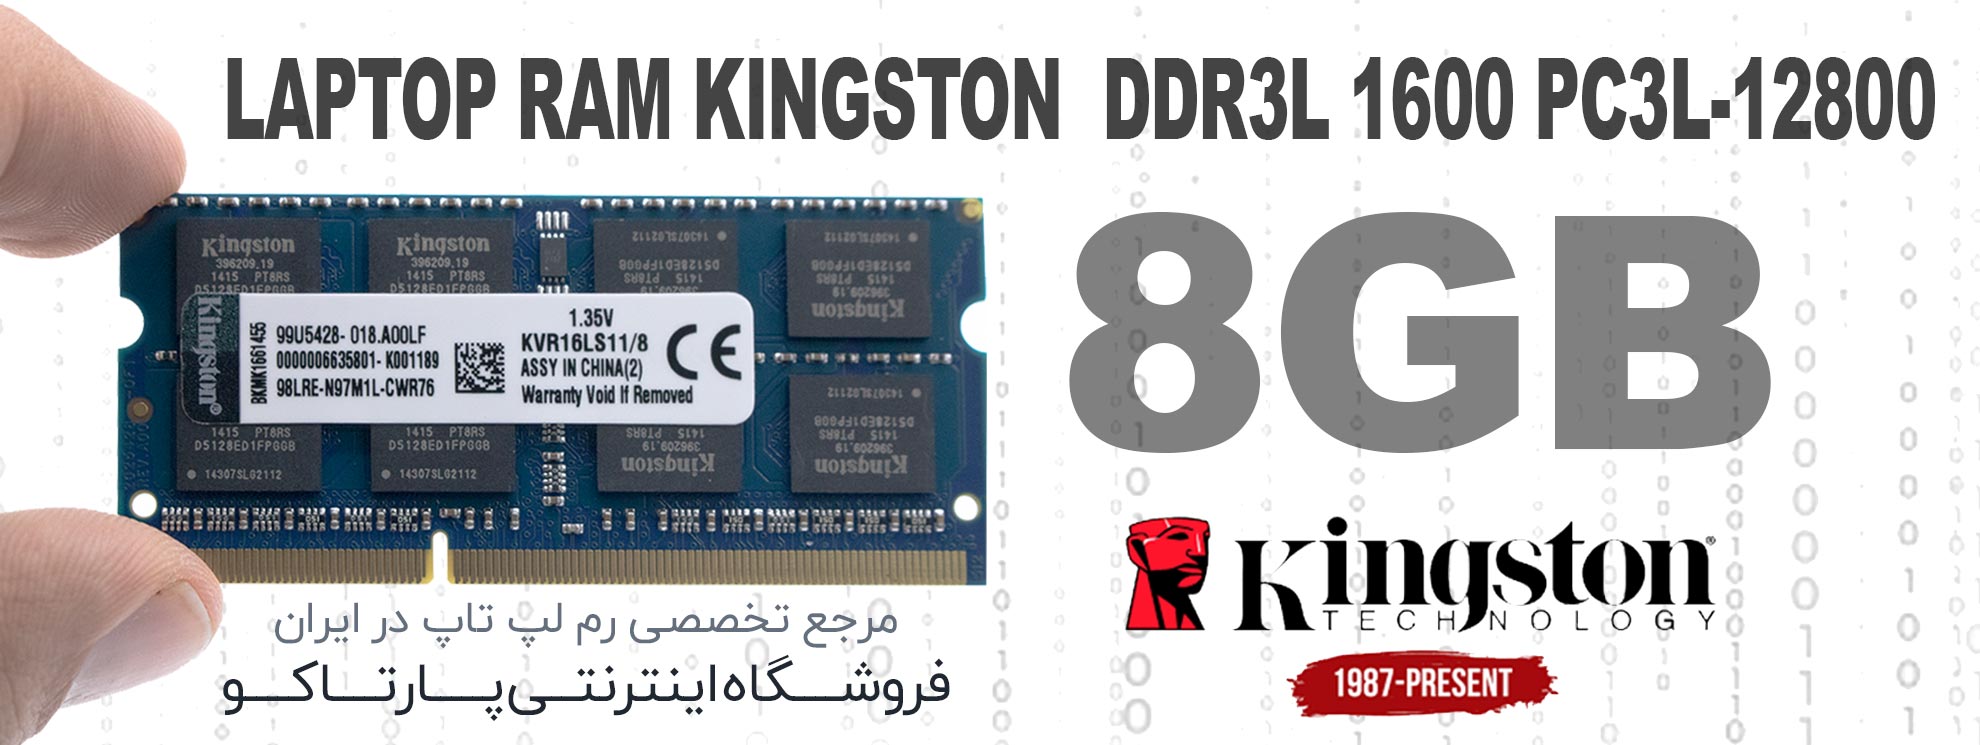 KINGSTON-PC3L-12800-8GB-RAM-BANNER